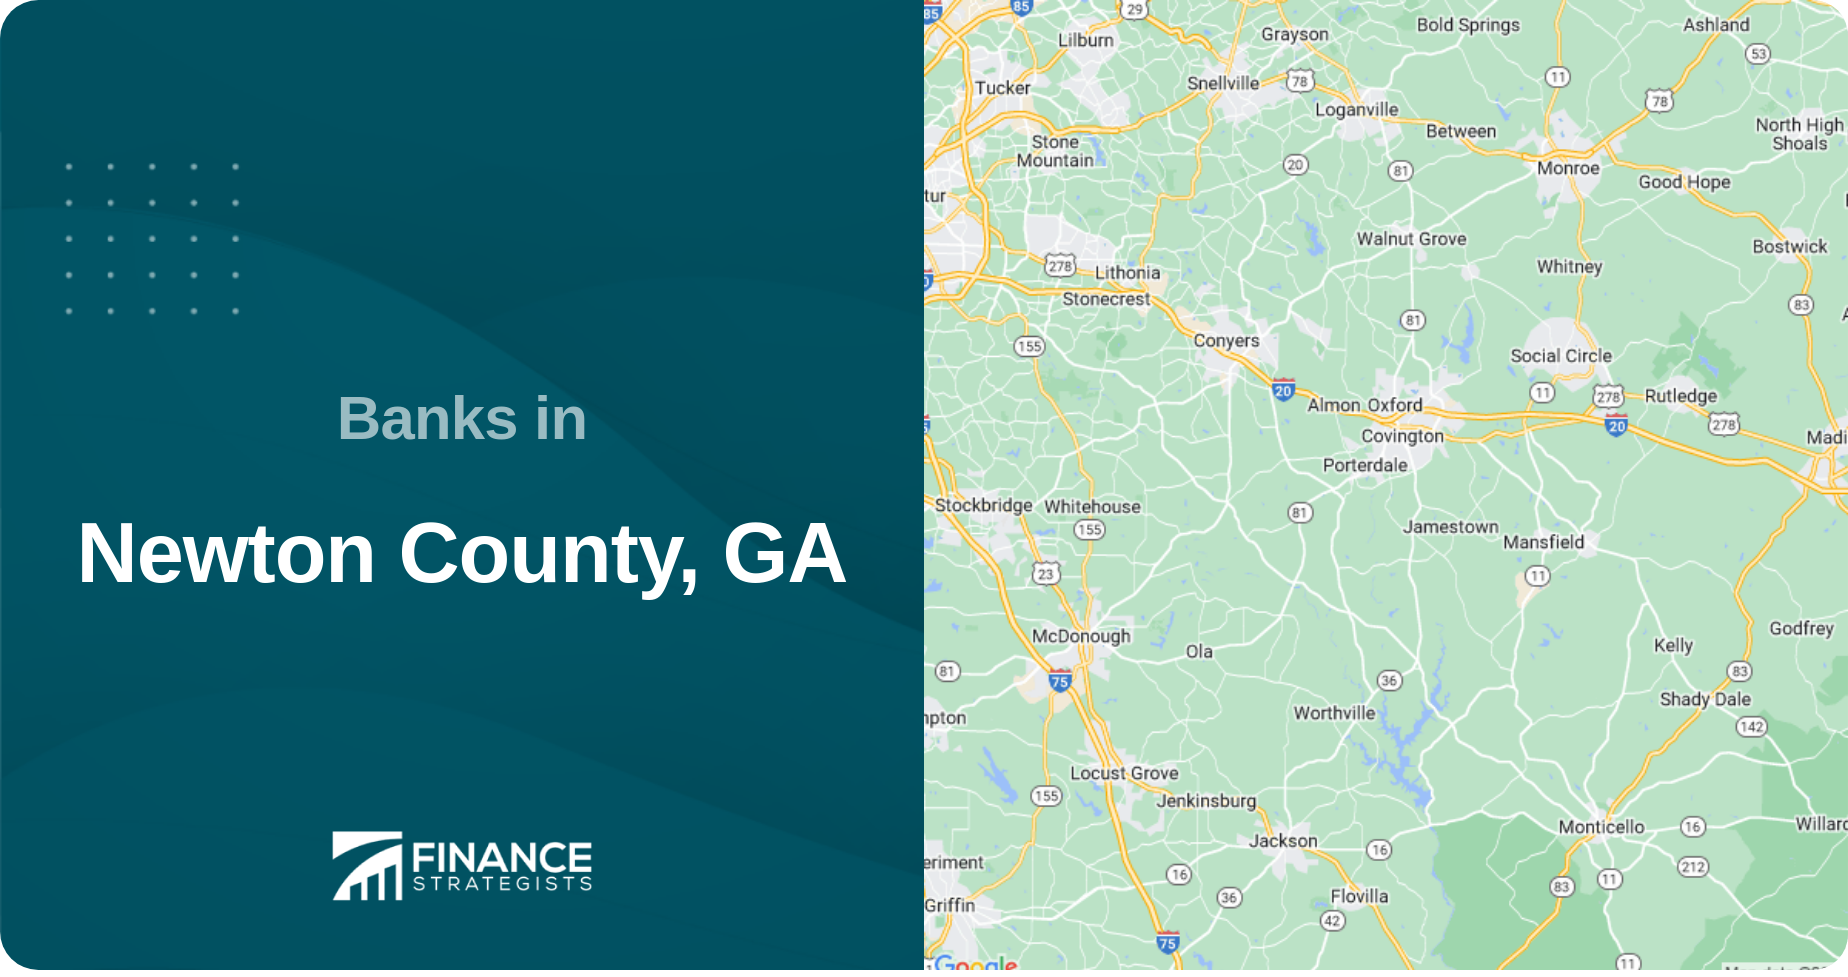 Banks in Newton County, GA